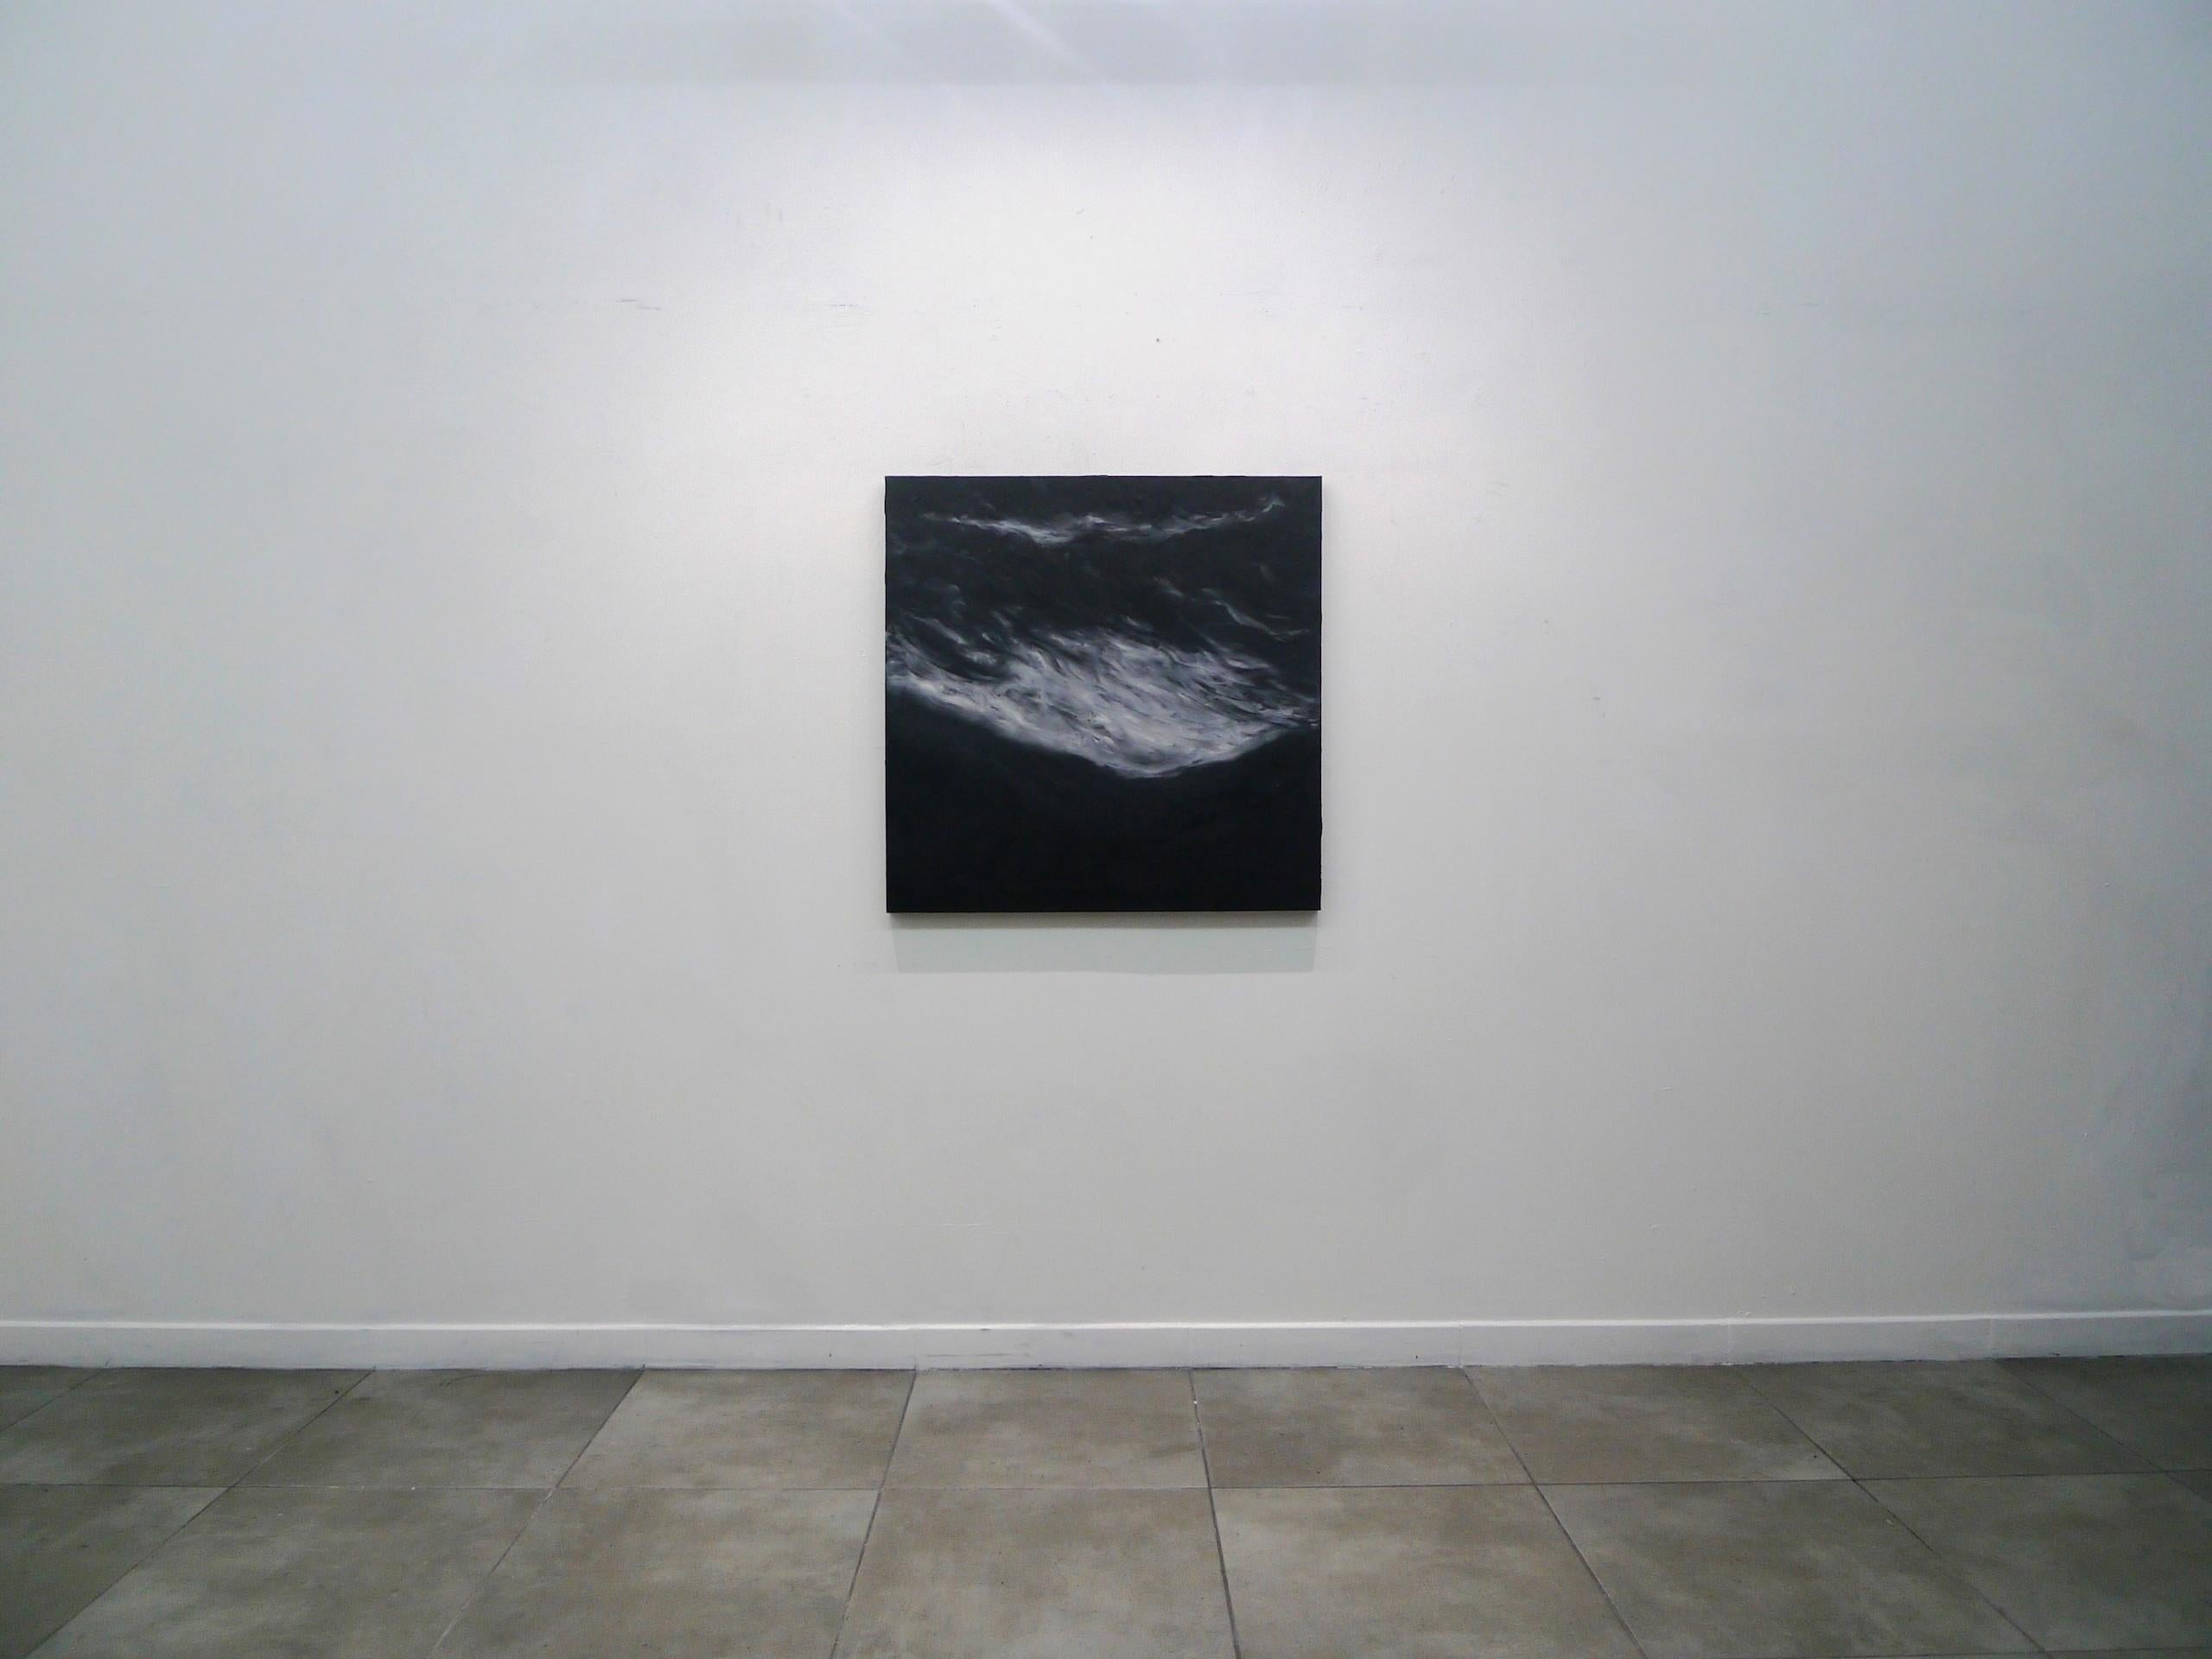 Birth by Franco Salas Borquez - Contemporary oil painting, seascape, wave, dark For Sale 4